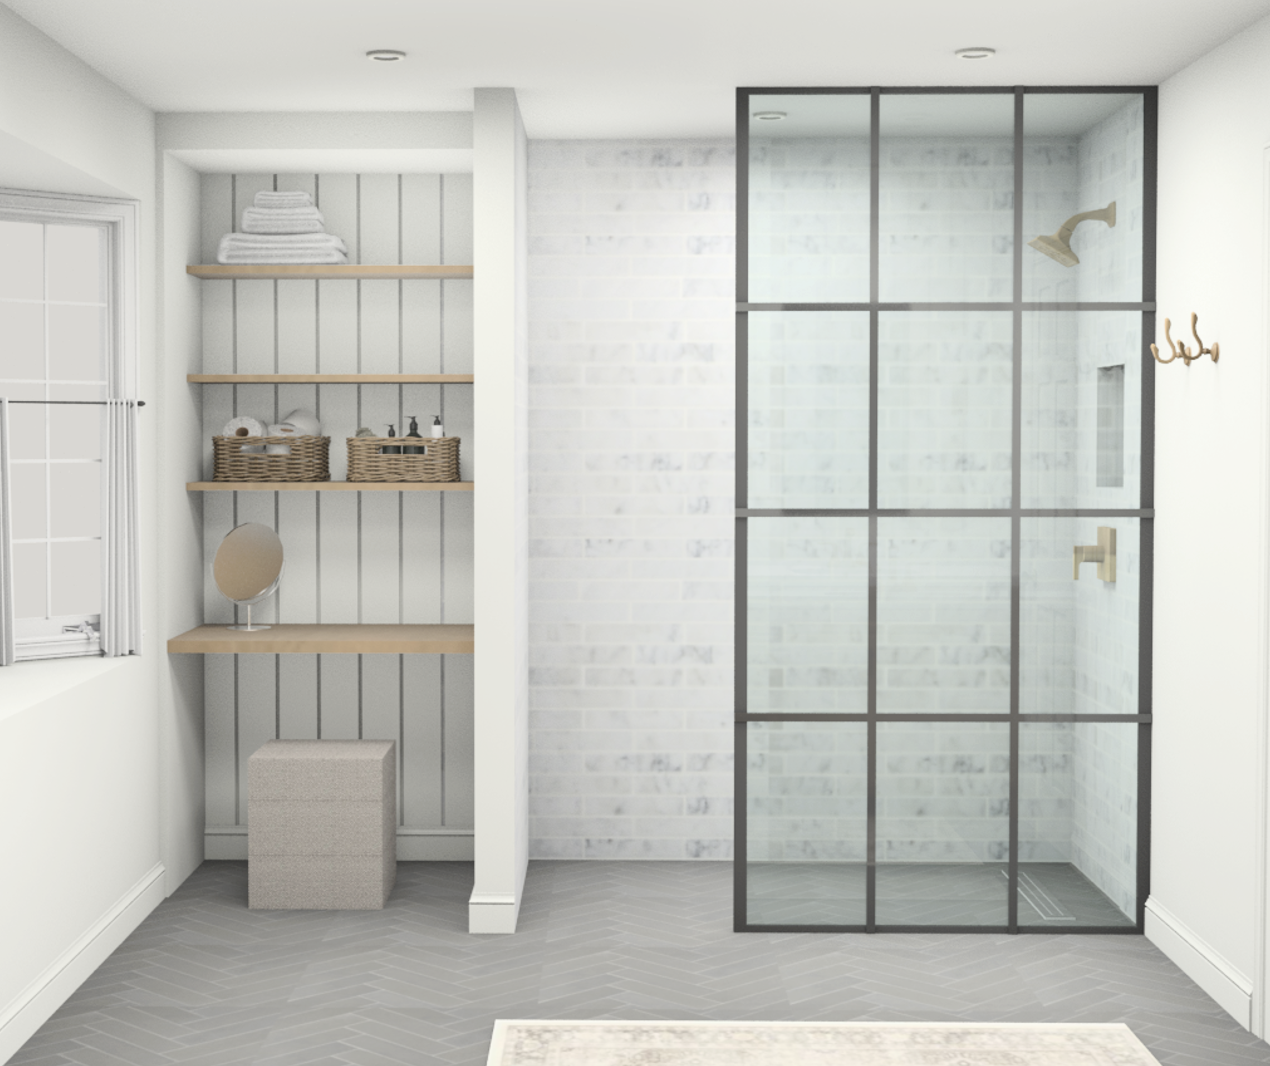 3D rendering of custom bathroom design with white oak vanity area and large walk-in shower